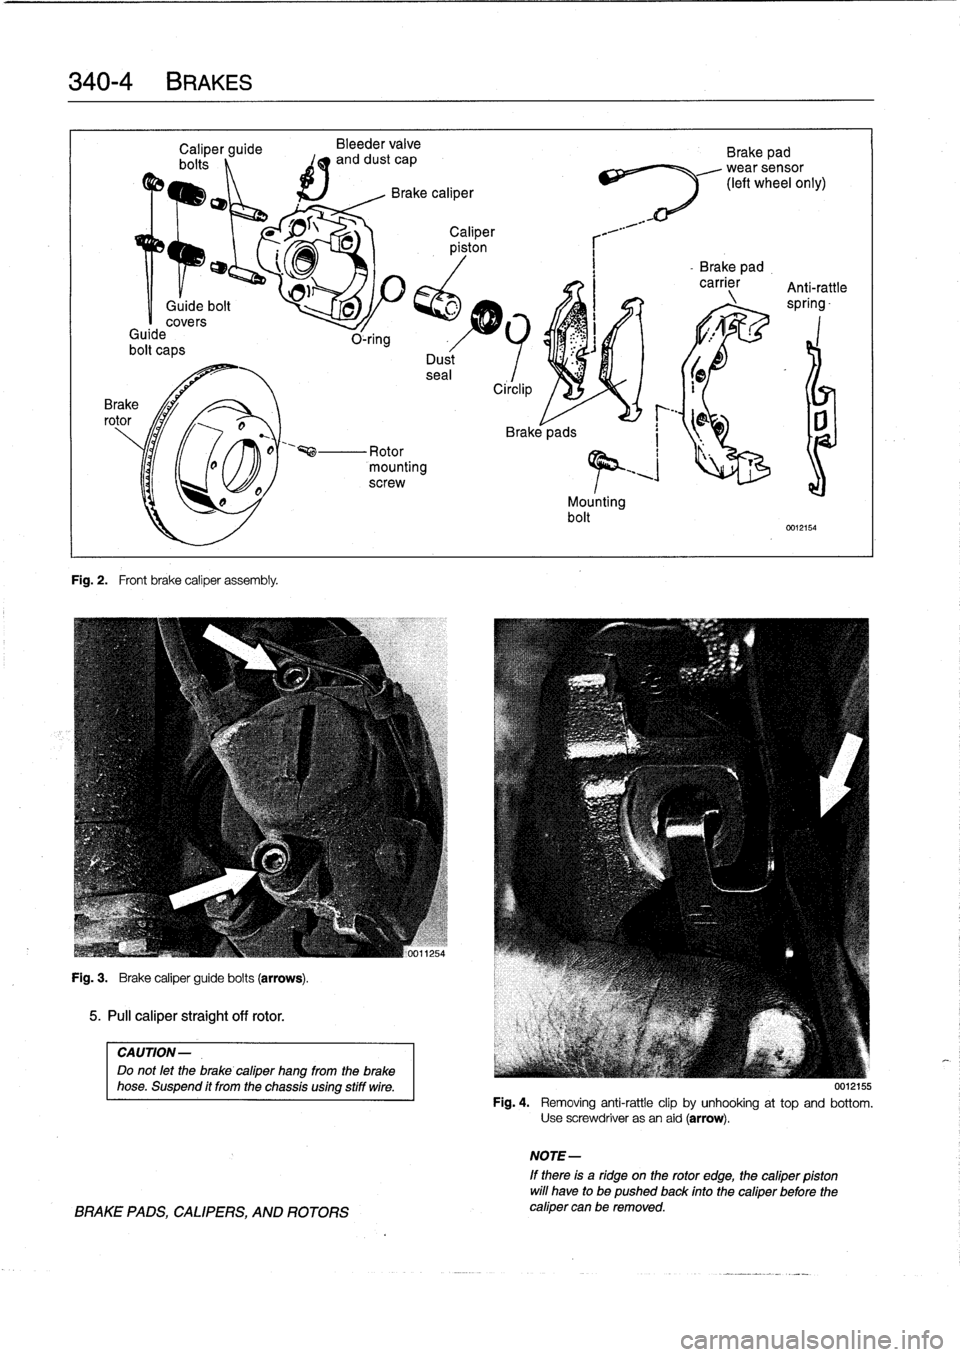 BMW 318i 1996 E36 Workshop Manual 
340-
4
BRAKES

Fig
.
2
.

	

Front
brake
caliper
assembly
.

Bleeder
valve
and
dust
cap

Mounting
bolt

Brake
pad
wearsensor
(left
wheel
only)

-
Brake
pad
.
carrier
Anti-rattle
^_
spring-

0012154

